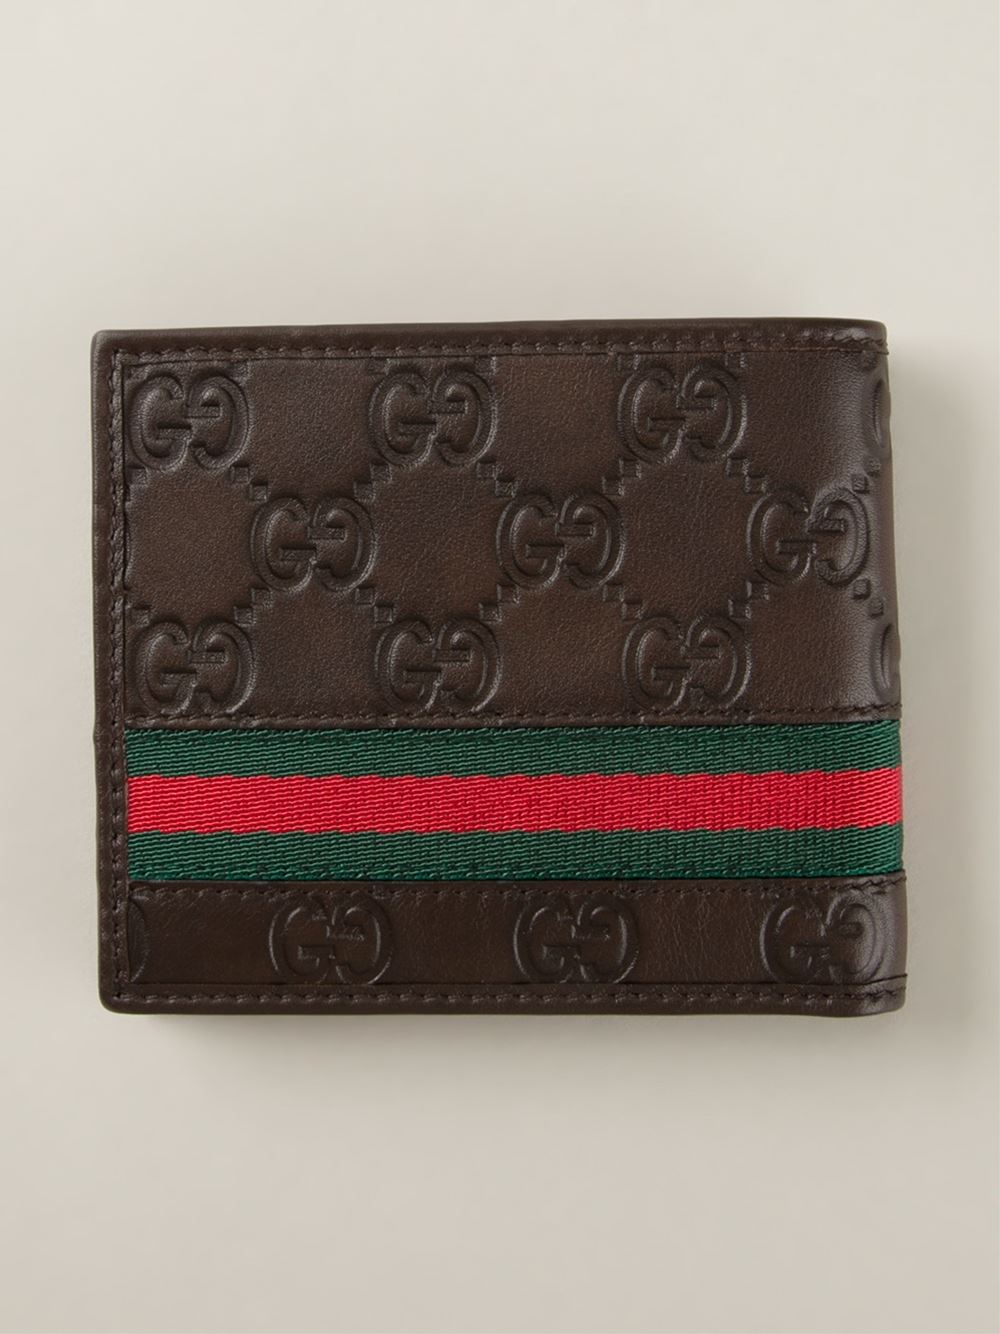 Lyst - Gucci Logo Embossed Wallet in Brown for Men